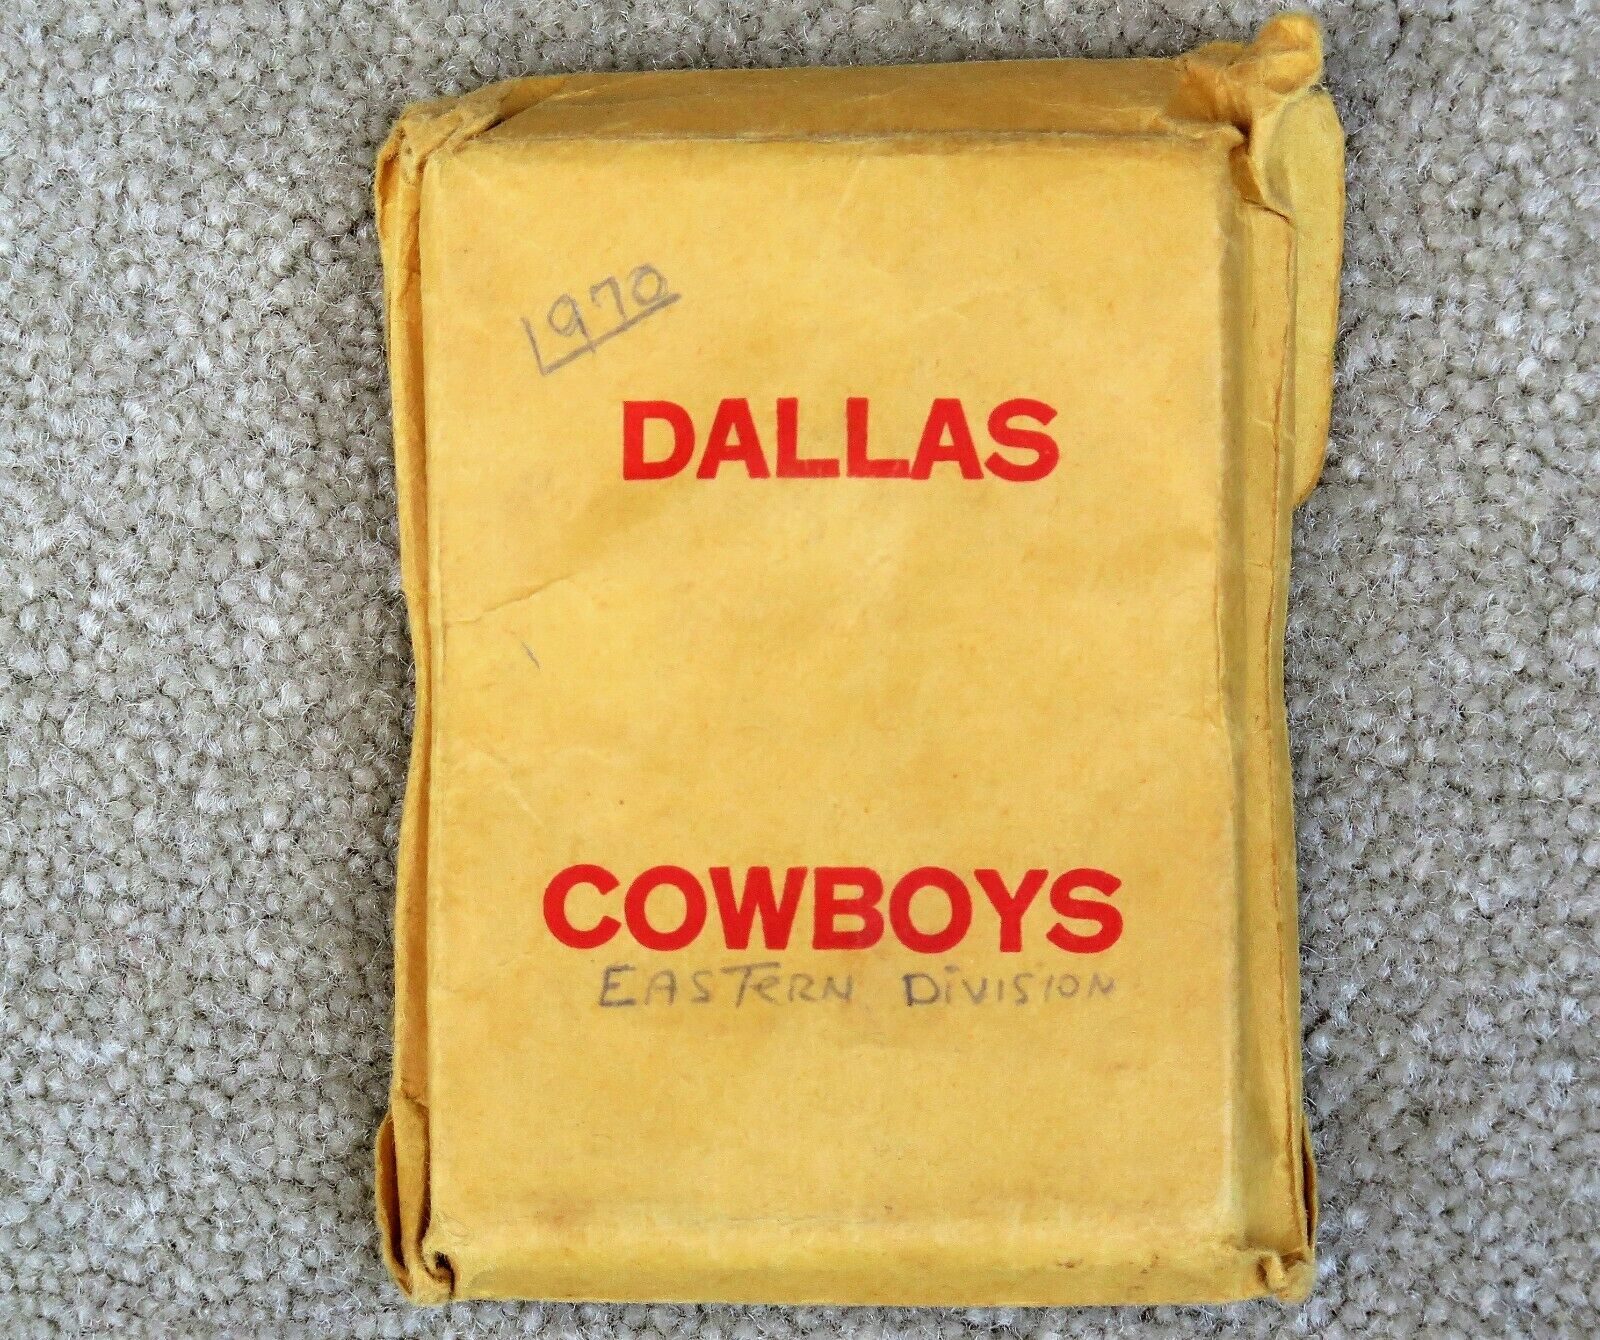 Dallas Cowboys Apba 1970 Team Set 37 Cards Includes Lilly, Ditka, Staubach